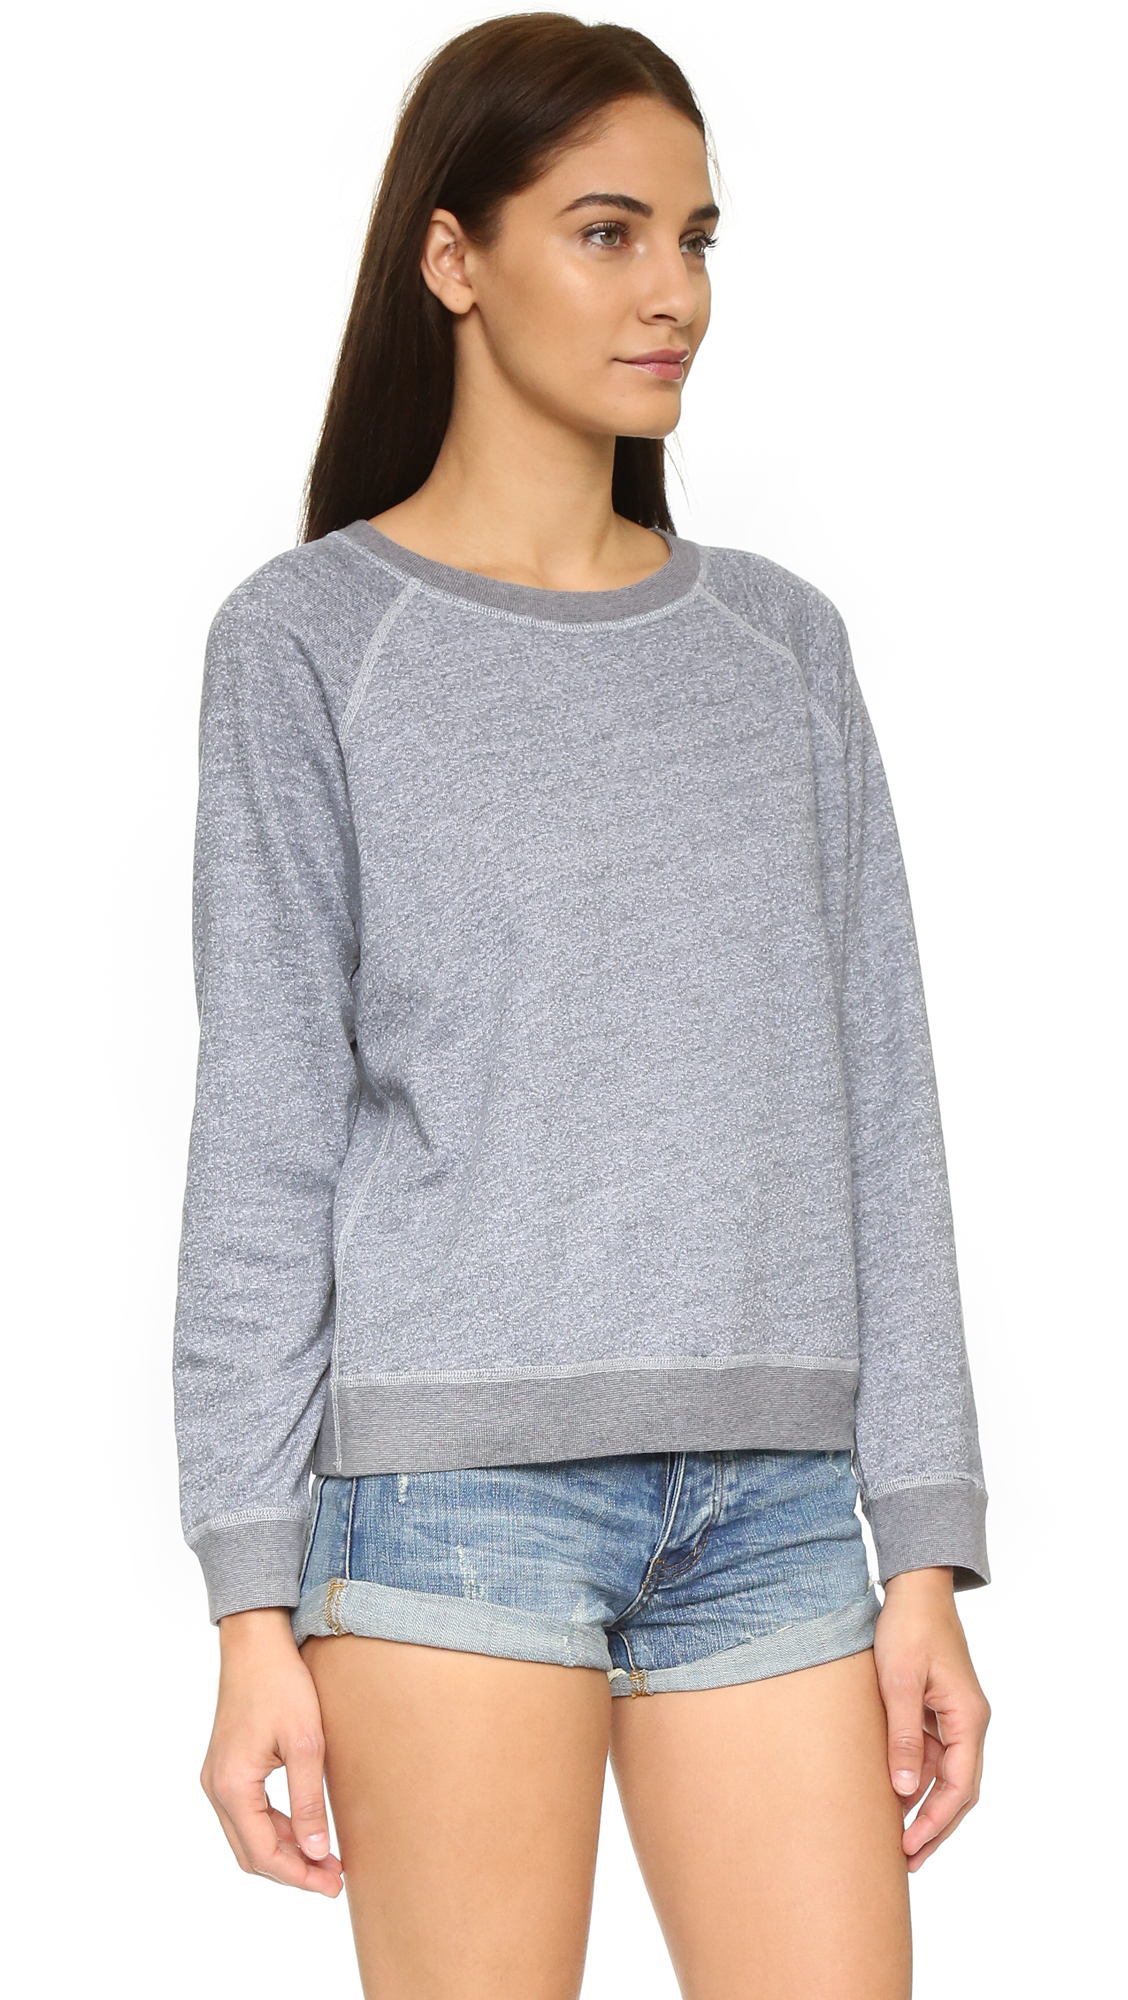 Monrow Synthetic Raglan Sweatshirt in Heather Grey (Grey) - Lyst